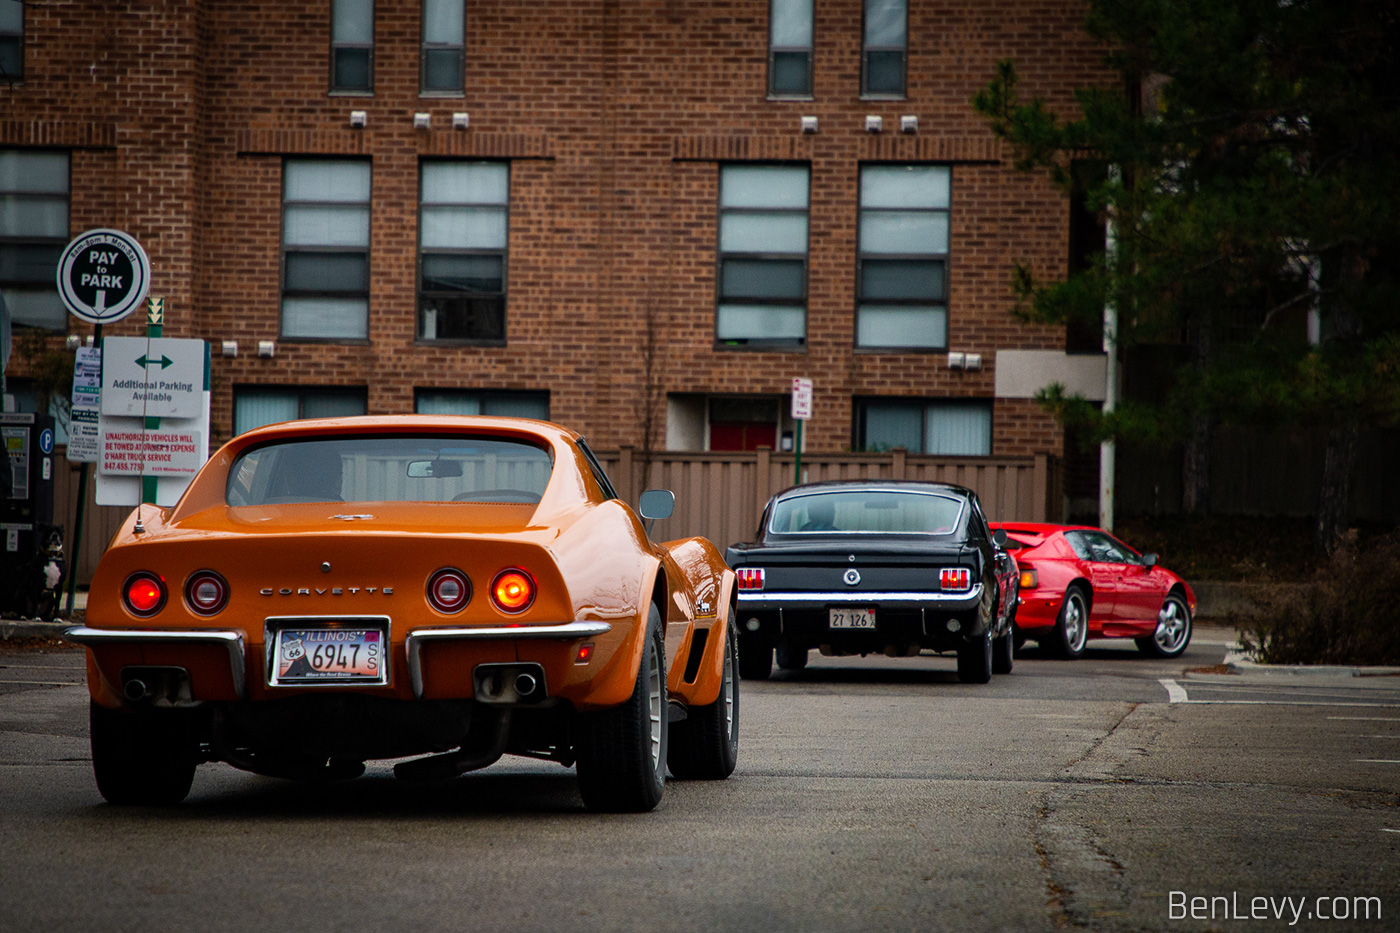 Classic Cars Leaving a Parking Lot in Oak Park